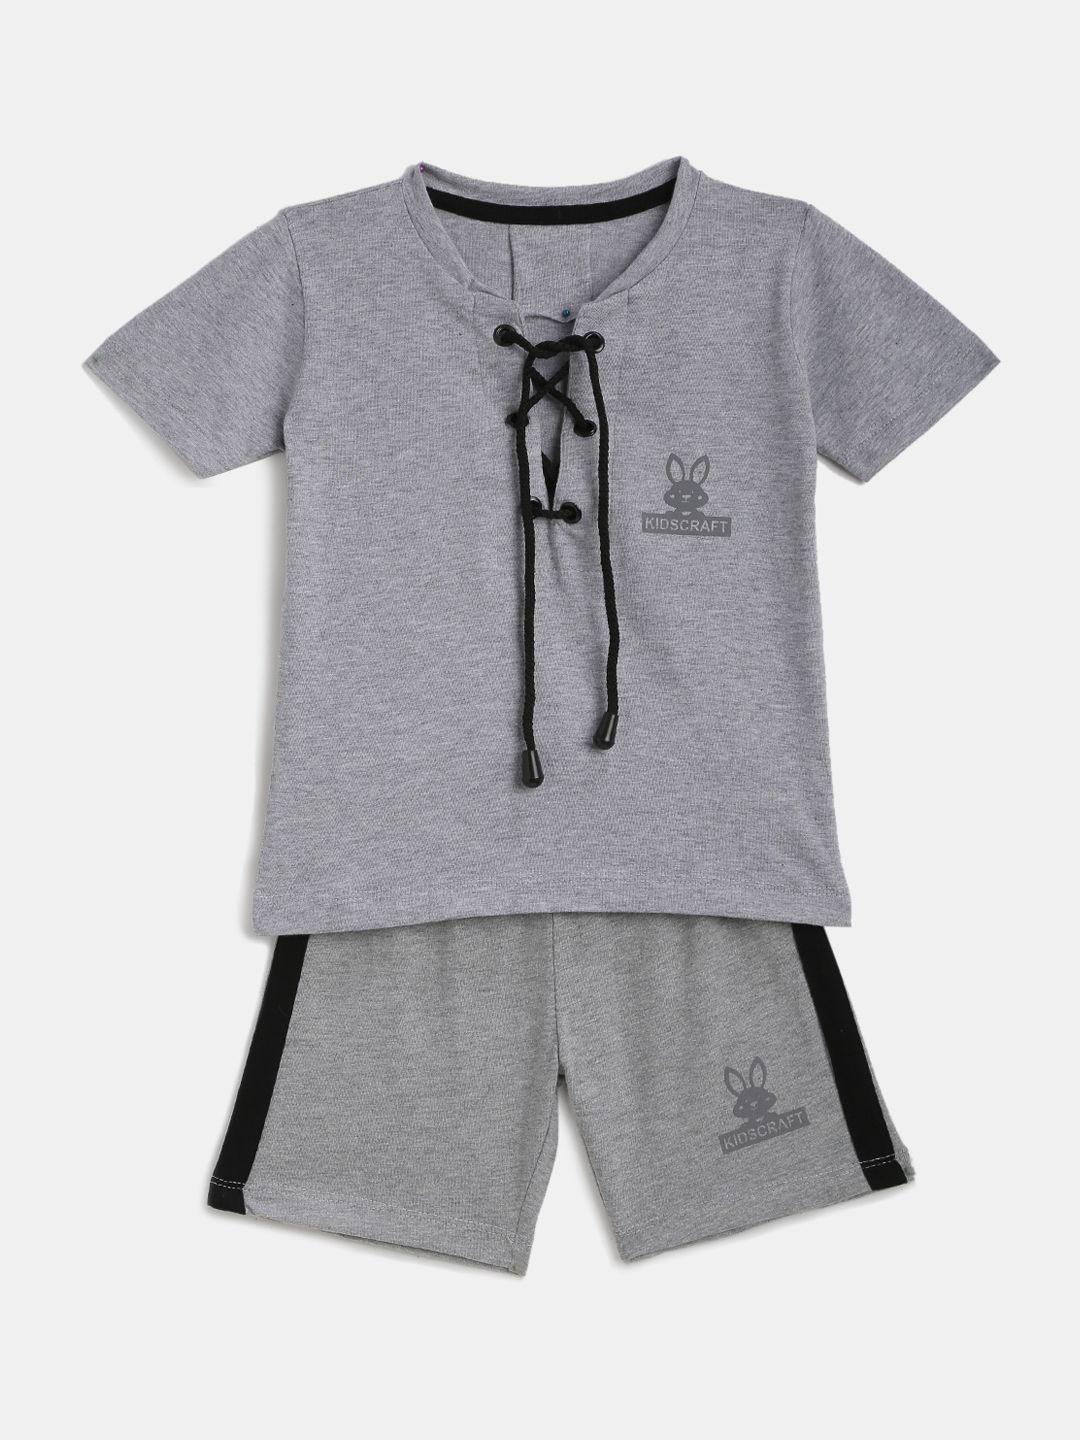 kidscraft boys grey printed t-shirt with shorts